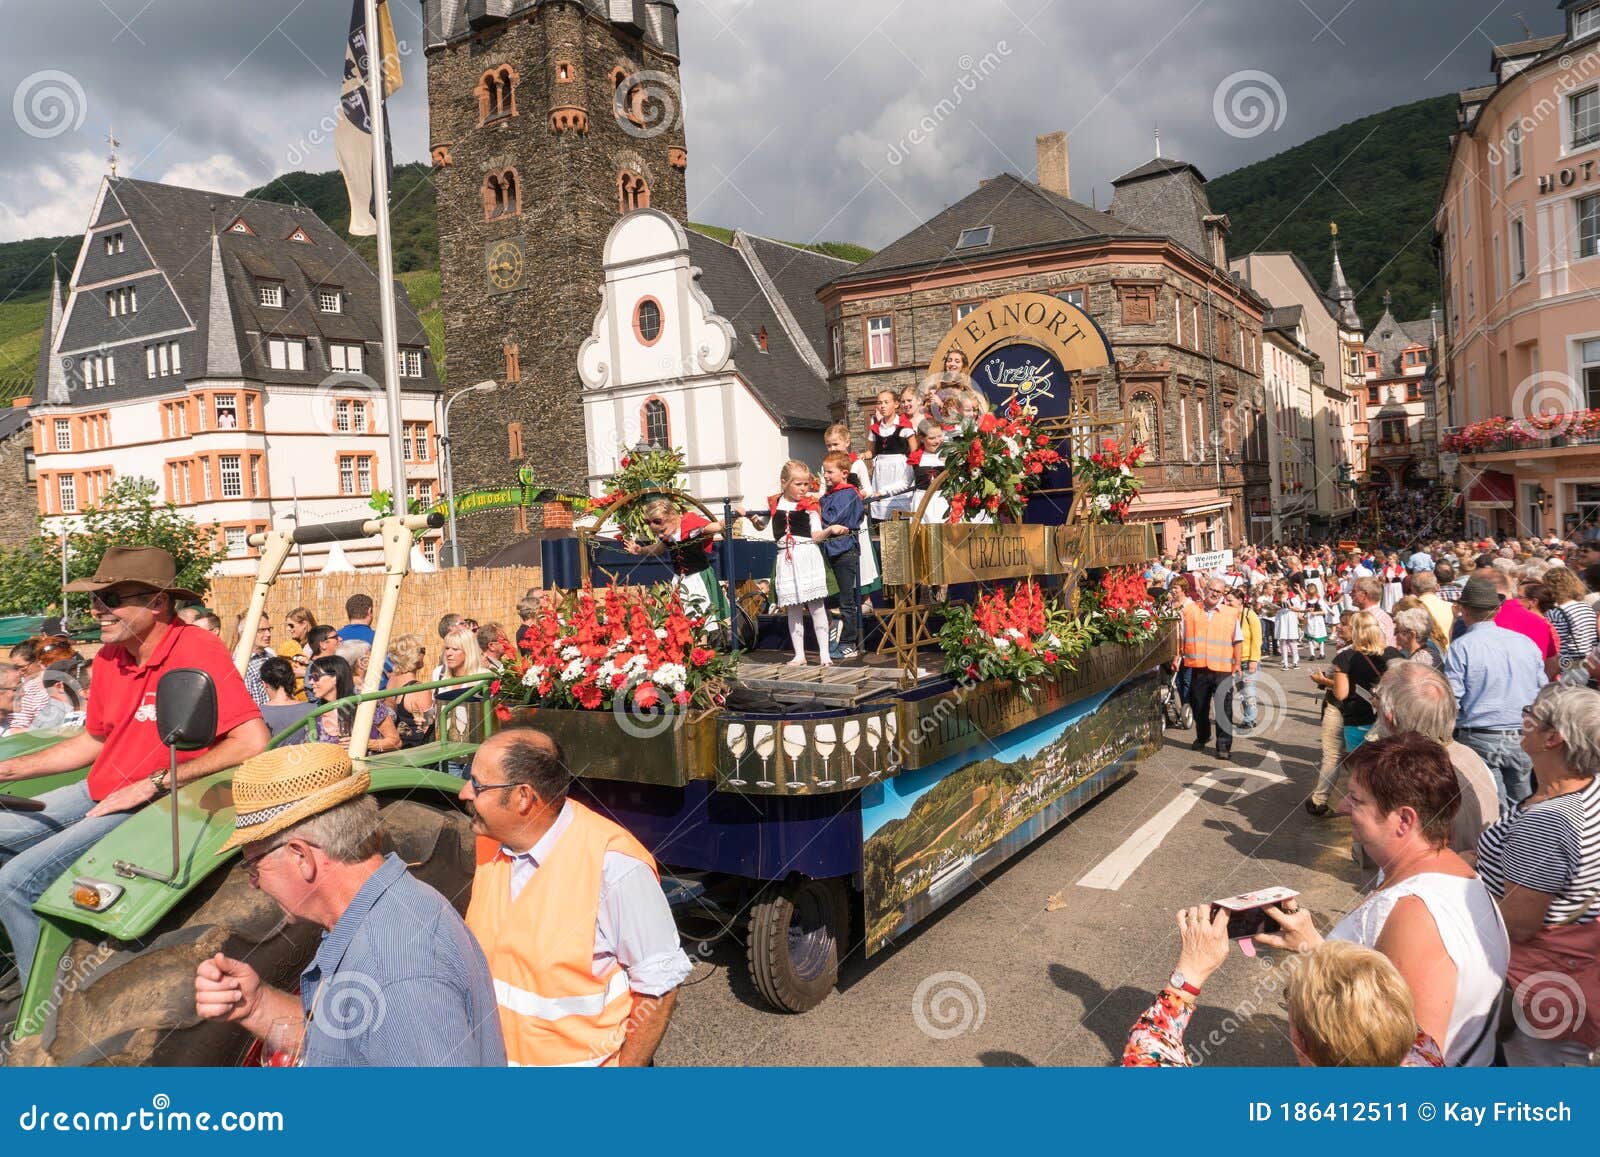 Wine Festival Parade in Bernkastel-Kues, Rheinland-Pfalz, Germany, Europe  Editorial Photo - Image of musician, european: 186412511